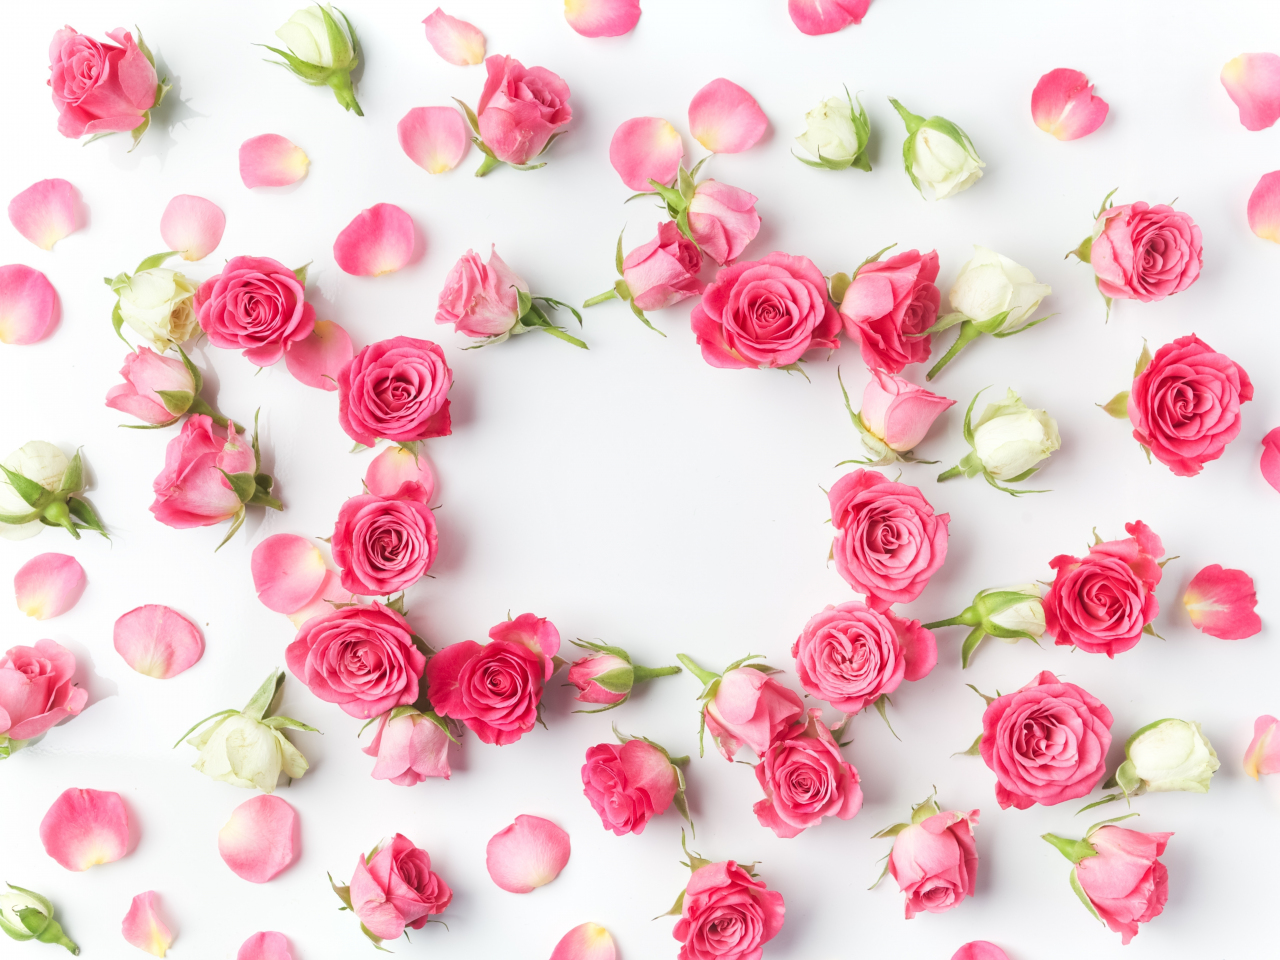 Download wallpaper 1280x960 flowers, petals, pink roses, flowers, standard  4:3 fullscreen 1280x960 hd background, 10878